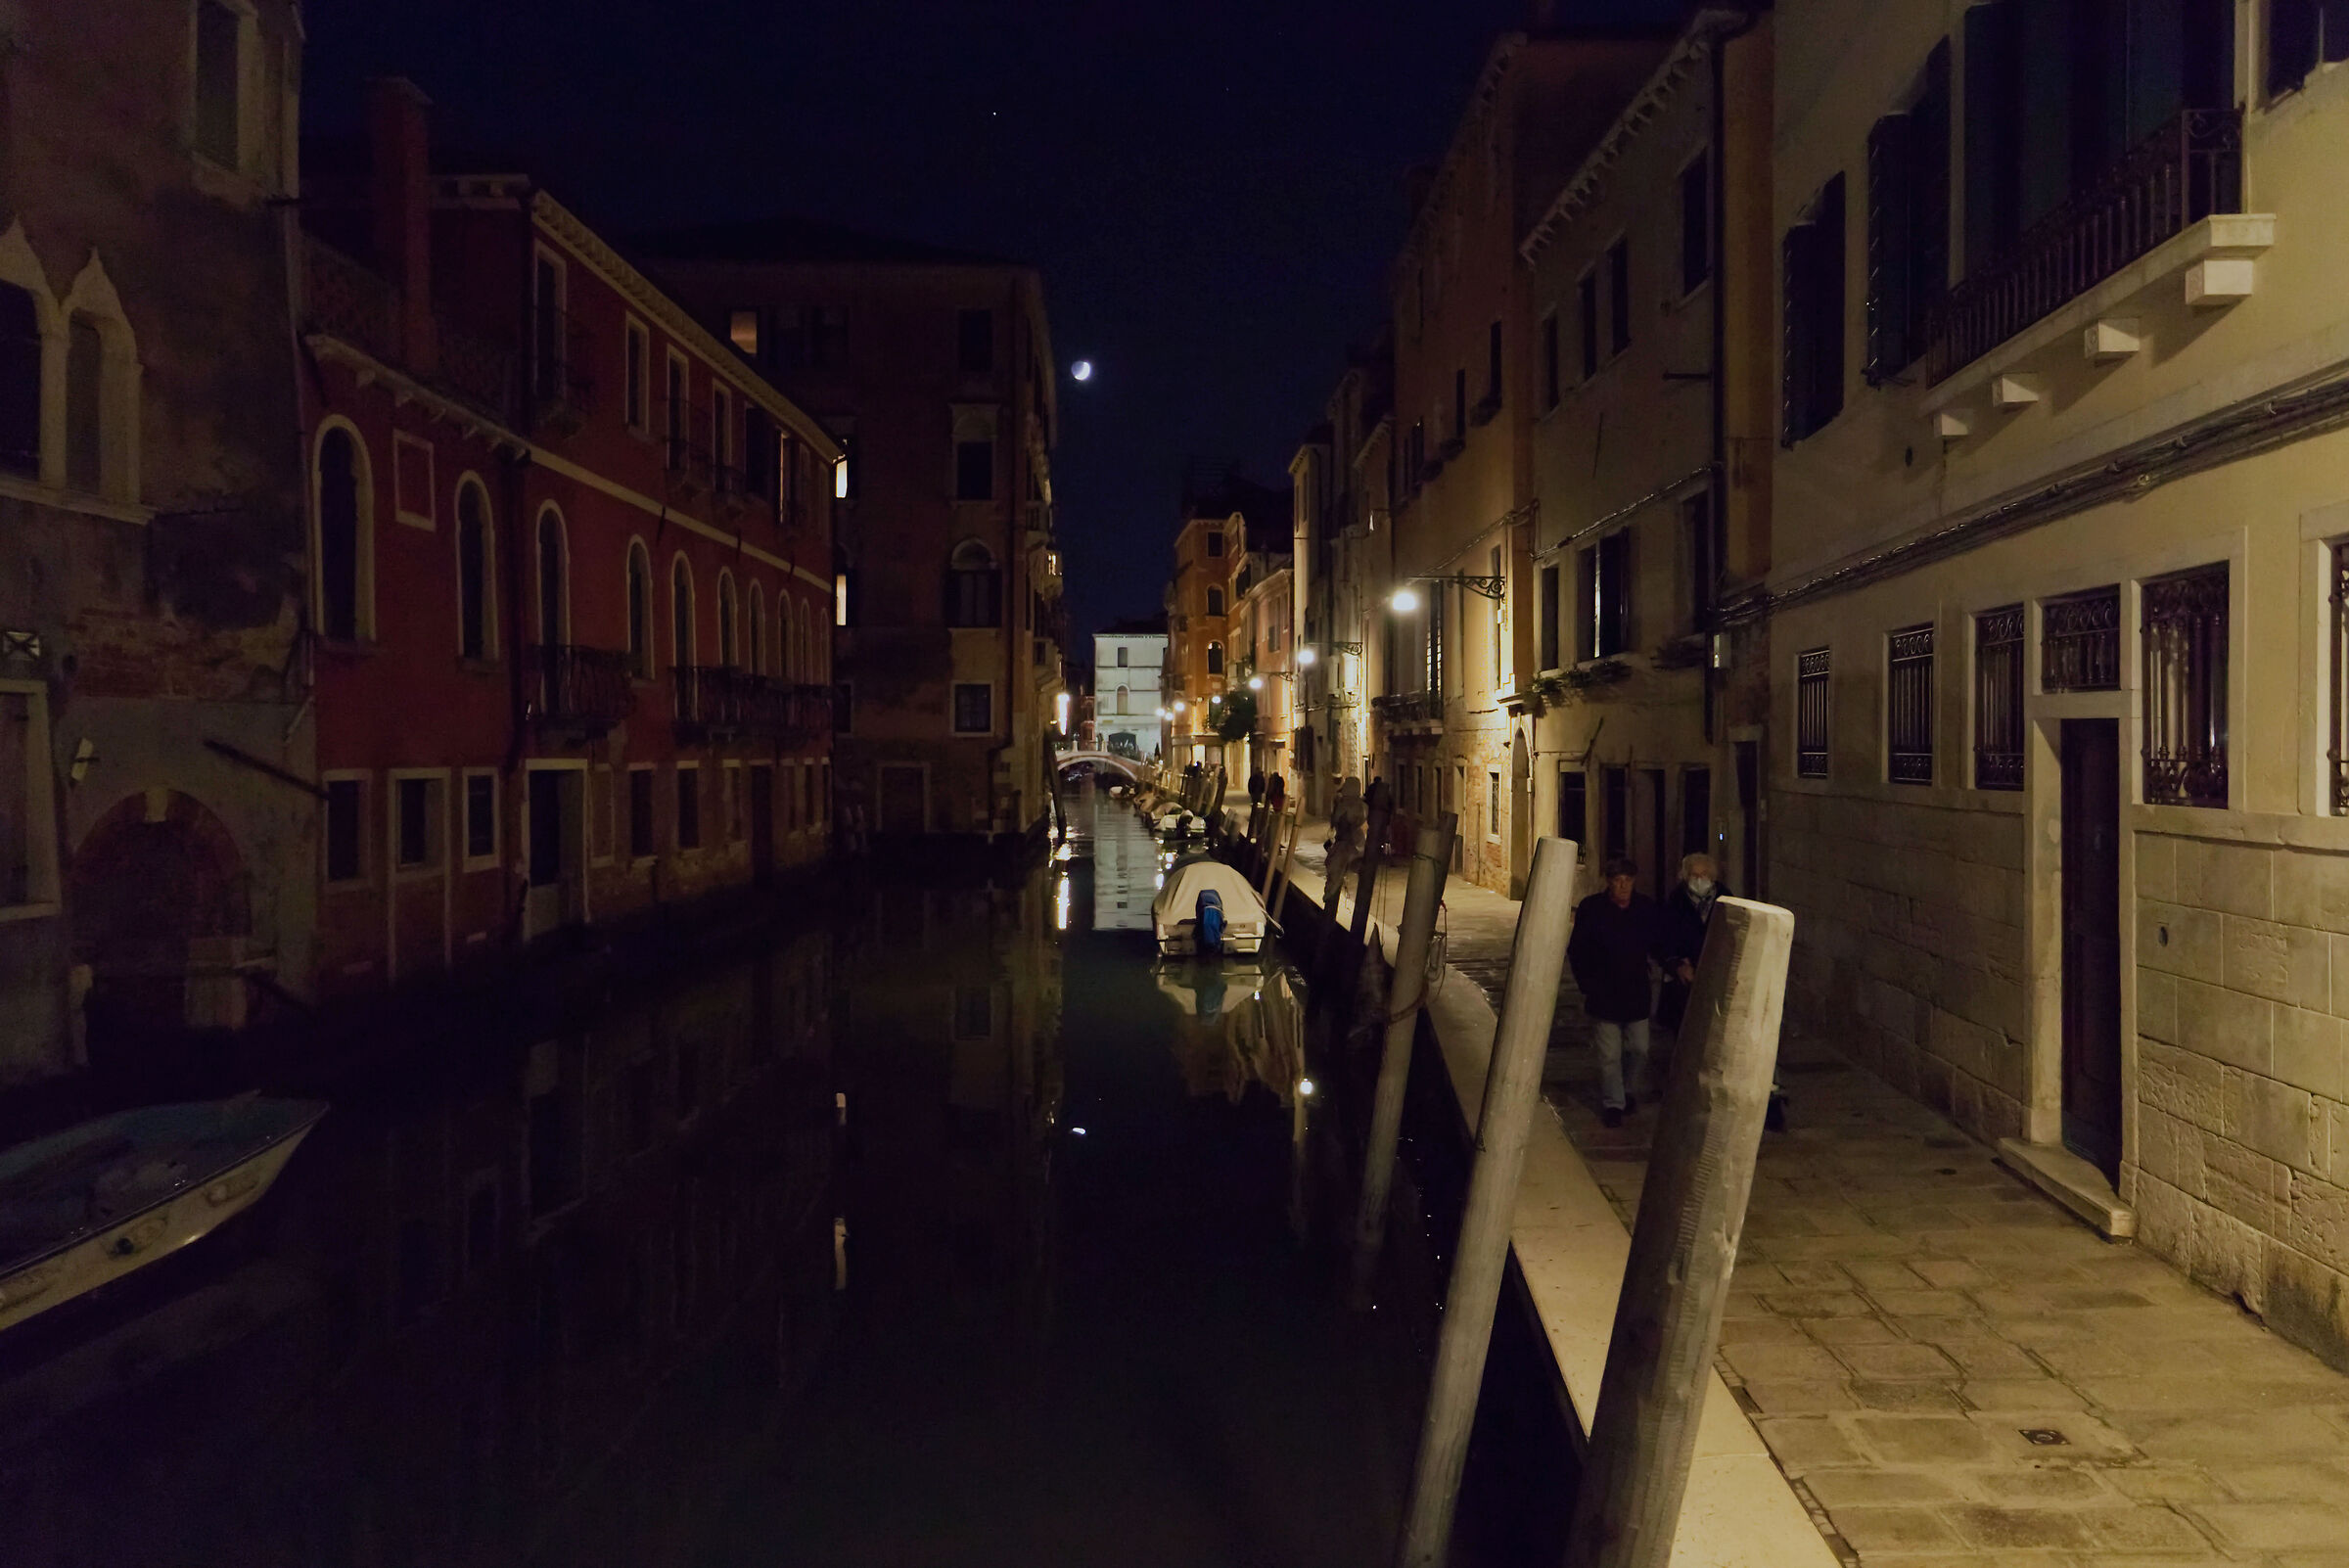 Venice glimpse, iso seal test...